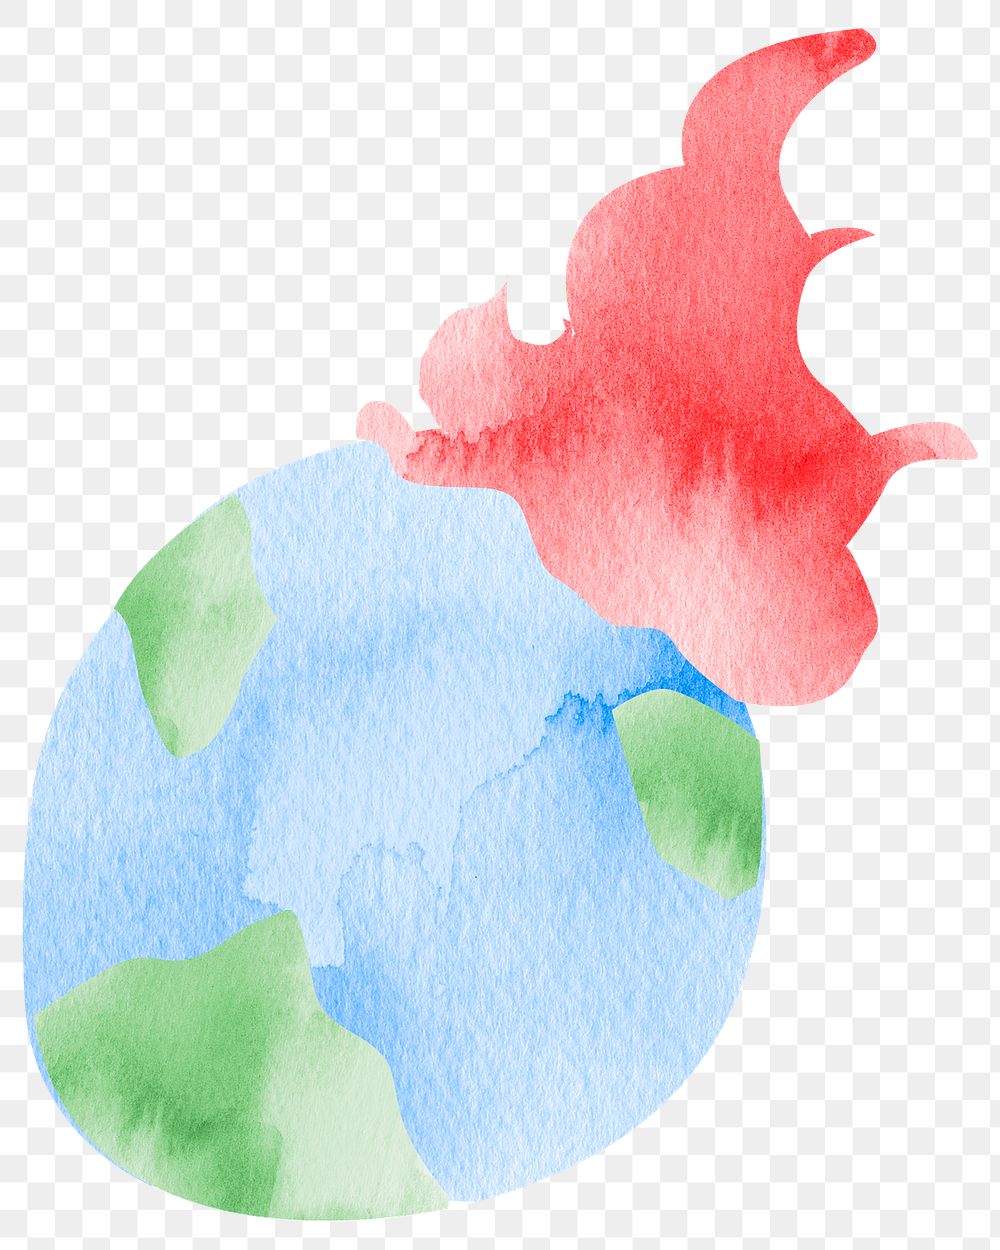 Png global warming design element in watercolor illustration